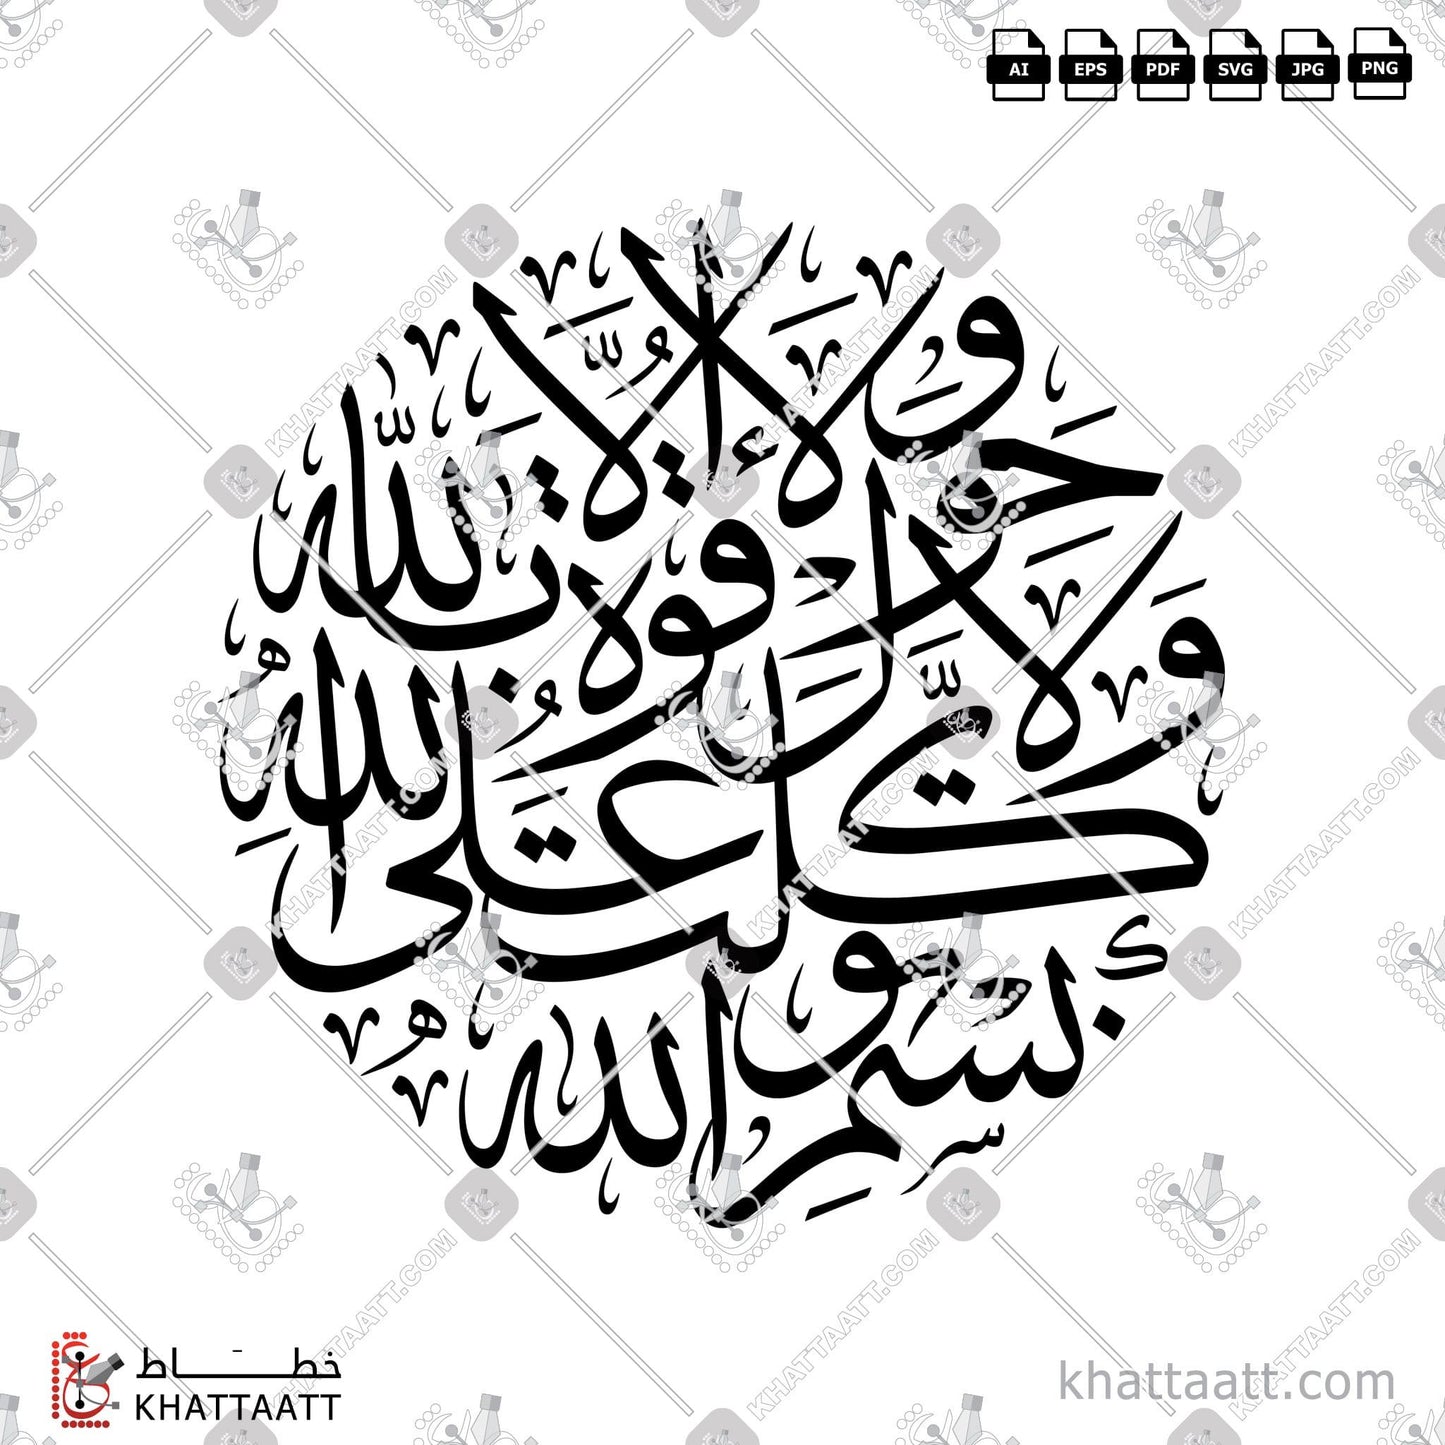 Download Arabic Calligraphy of بسم الله توكلت على الله ولا حول ولا قوة إلا بالله in Thuluth - خط الثلث in vector and .png